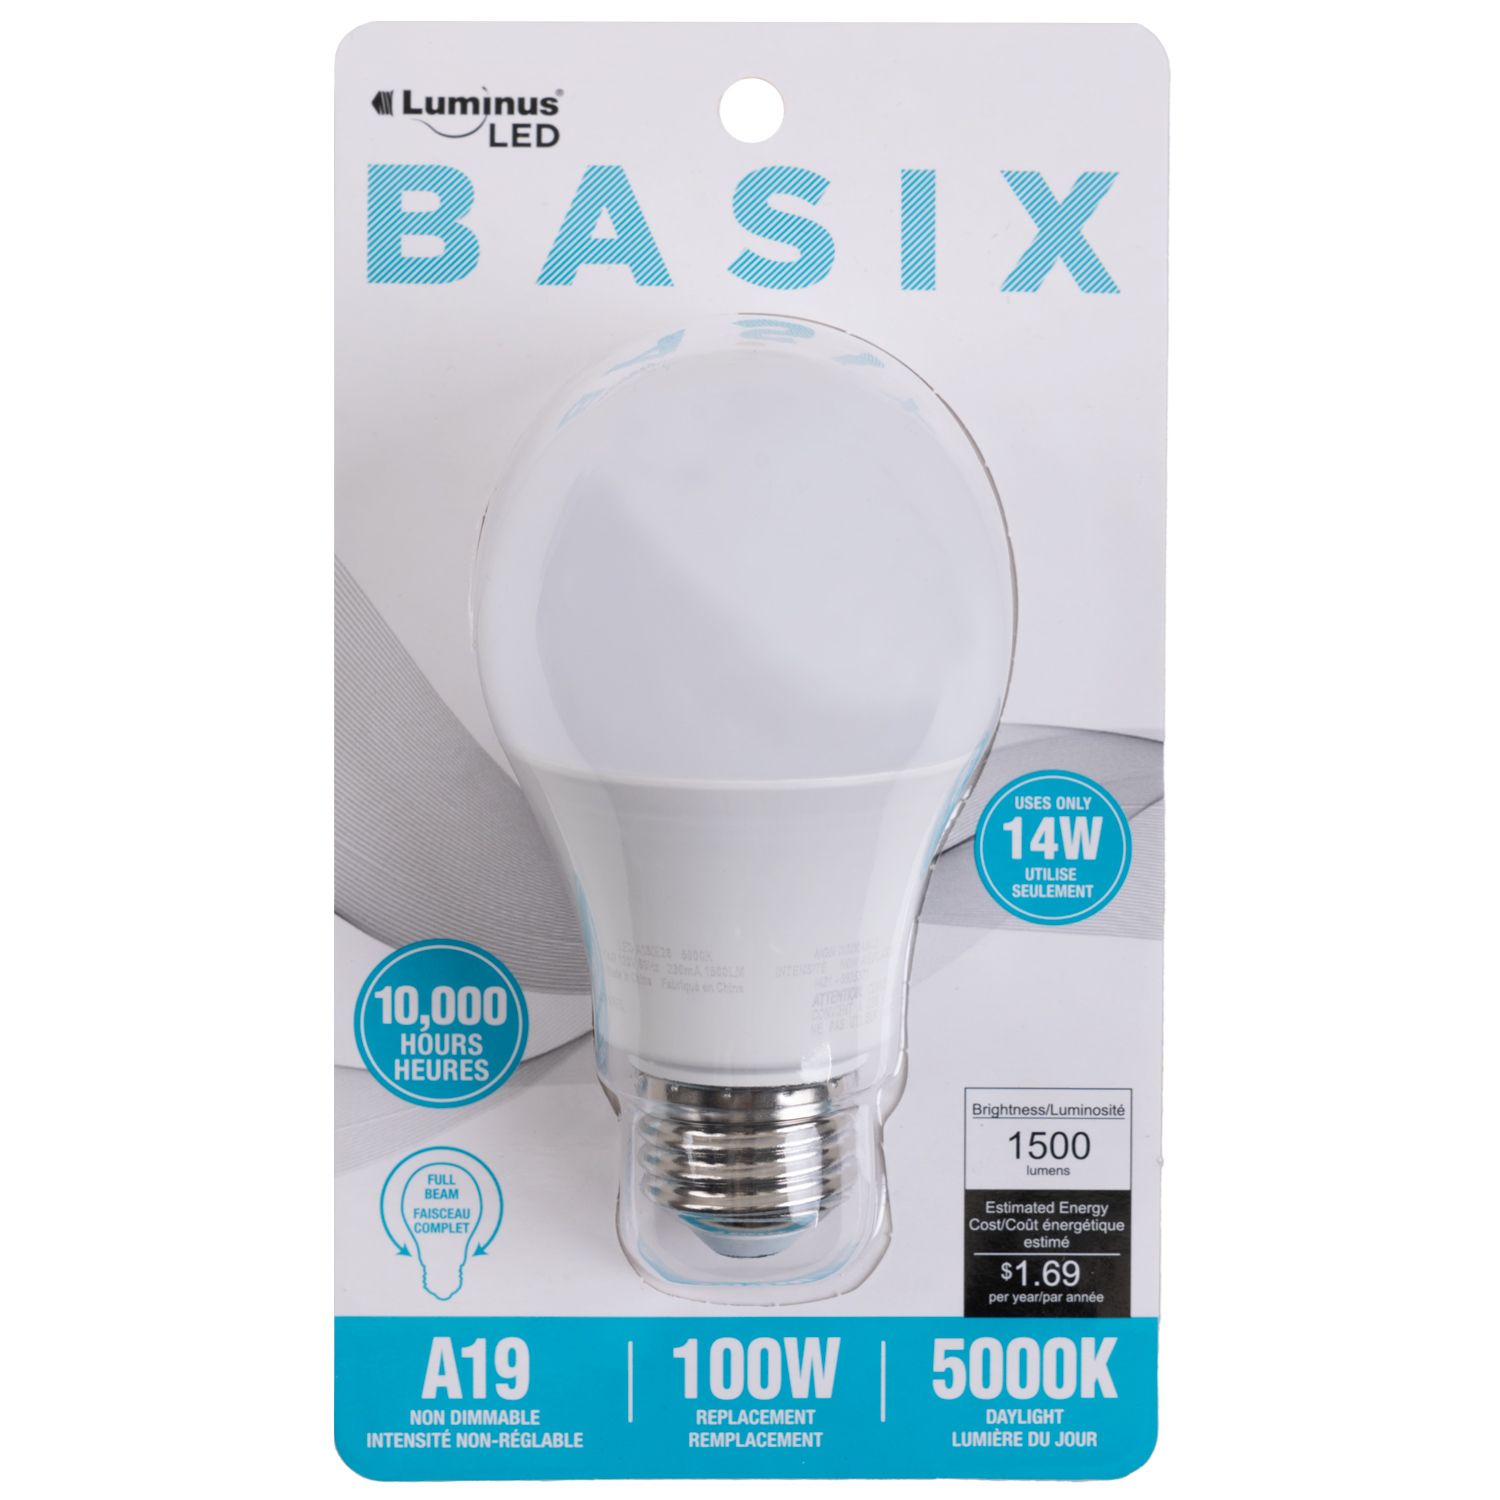 Basix - LED lightbulb, 100W replacement